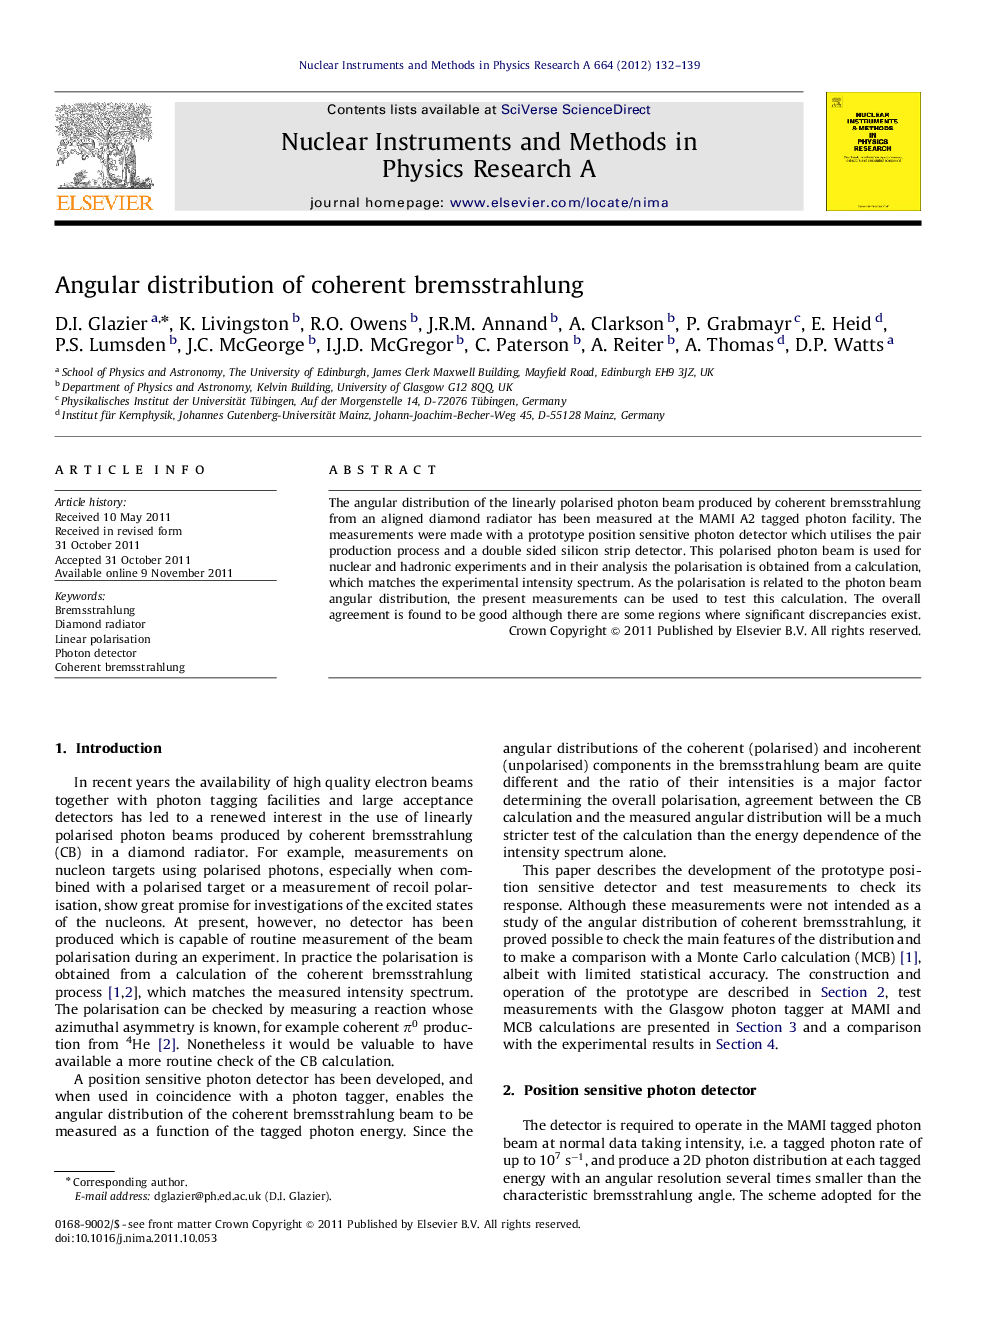 Angular distribution of coherent bremsstrahlung